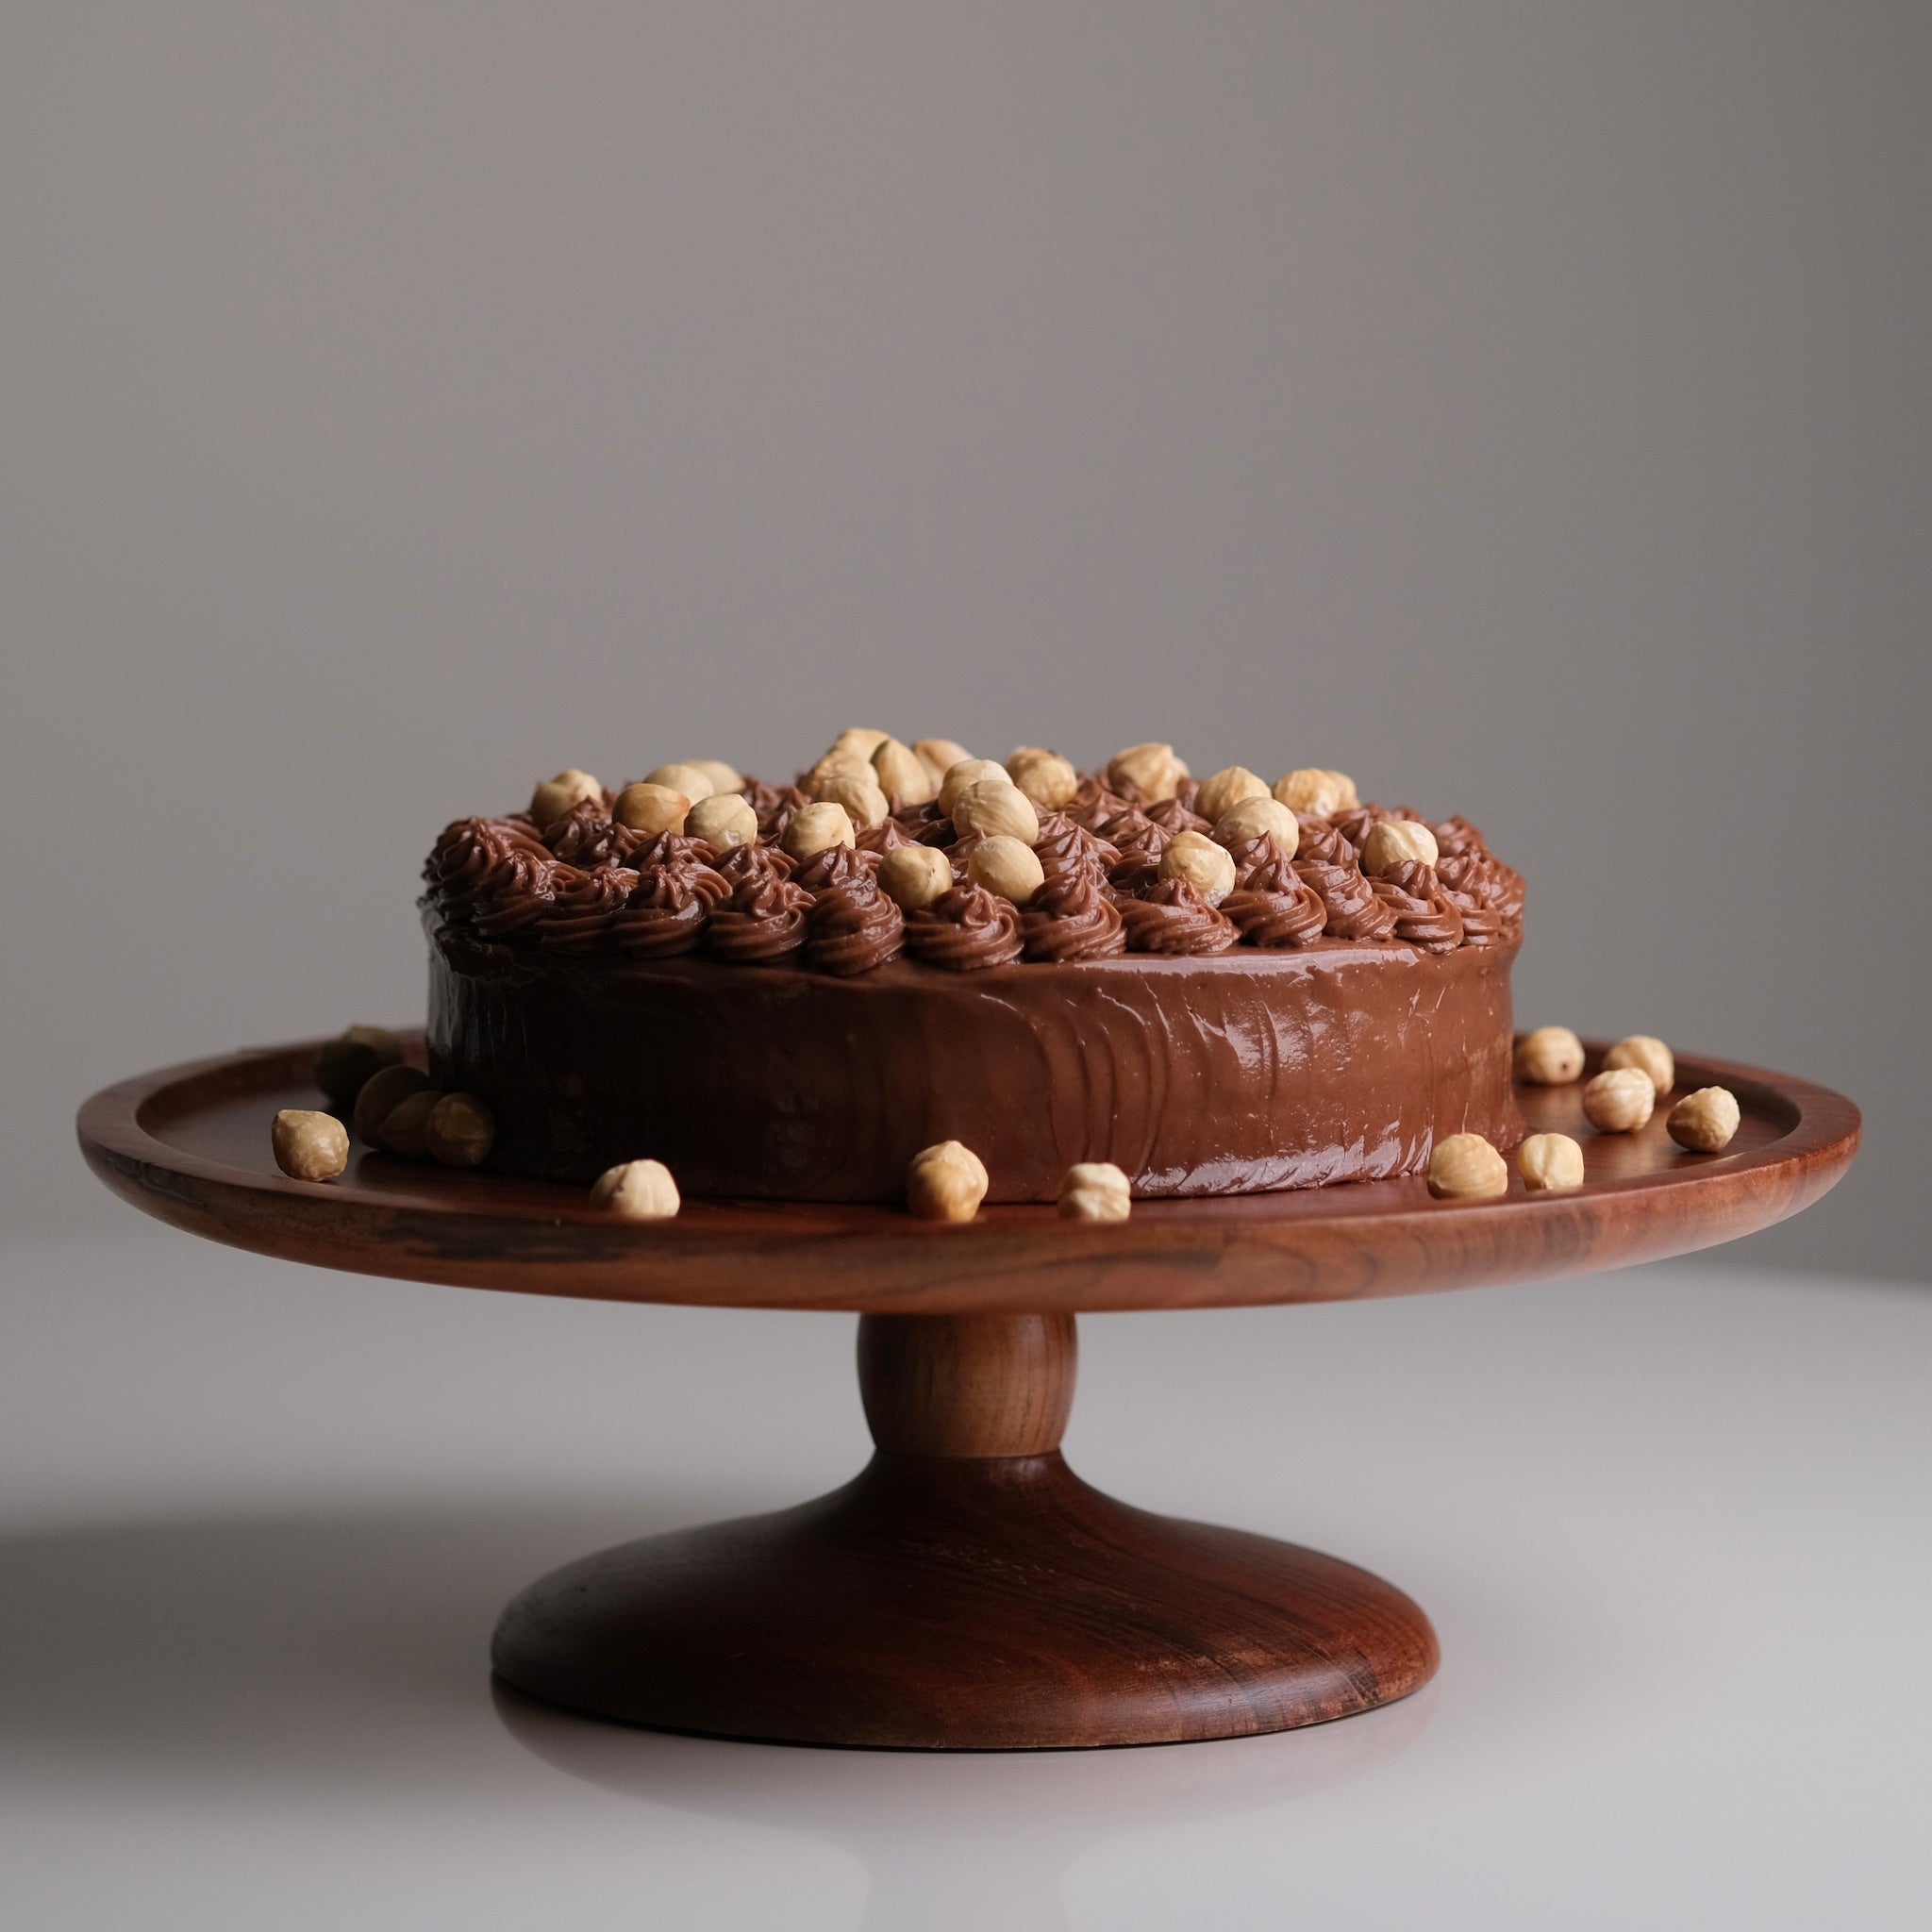 Chocolate Round Hazelnut Praline Cake, Packaging Type: Box, Weight: 1 kg